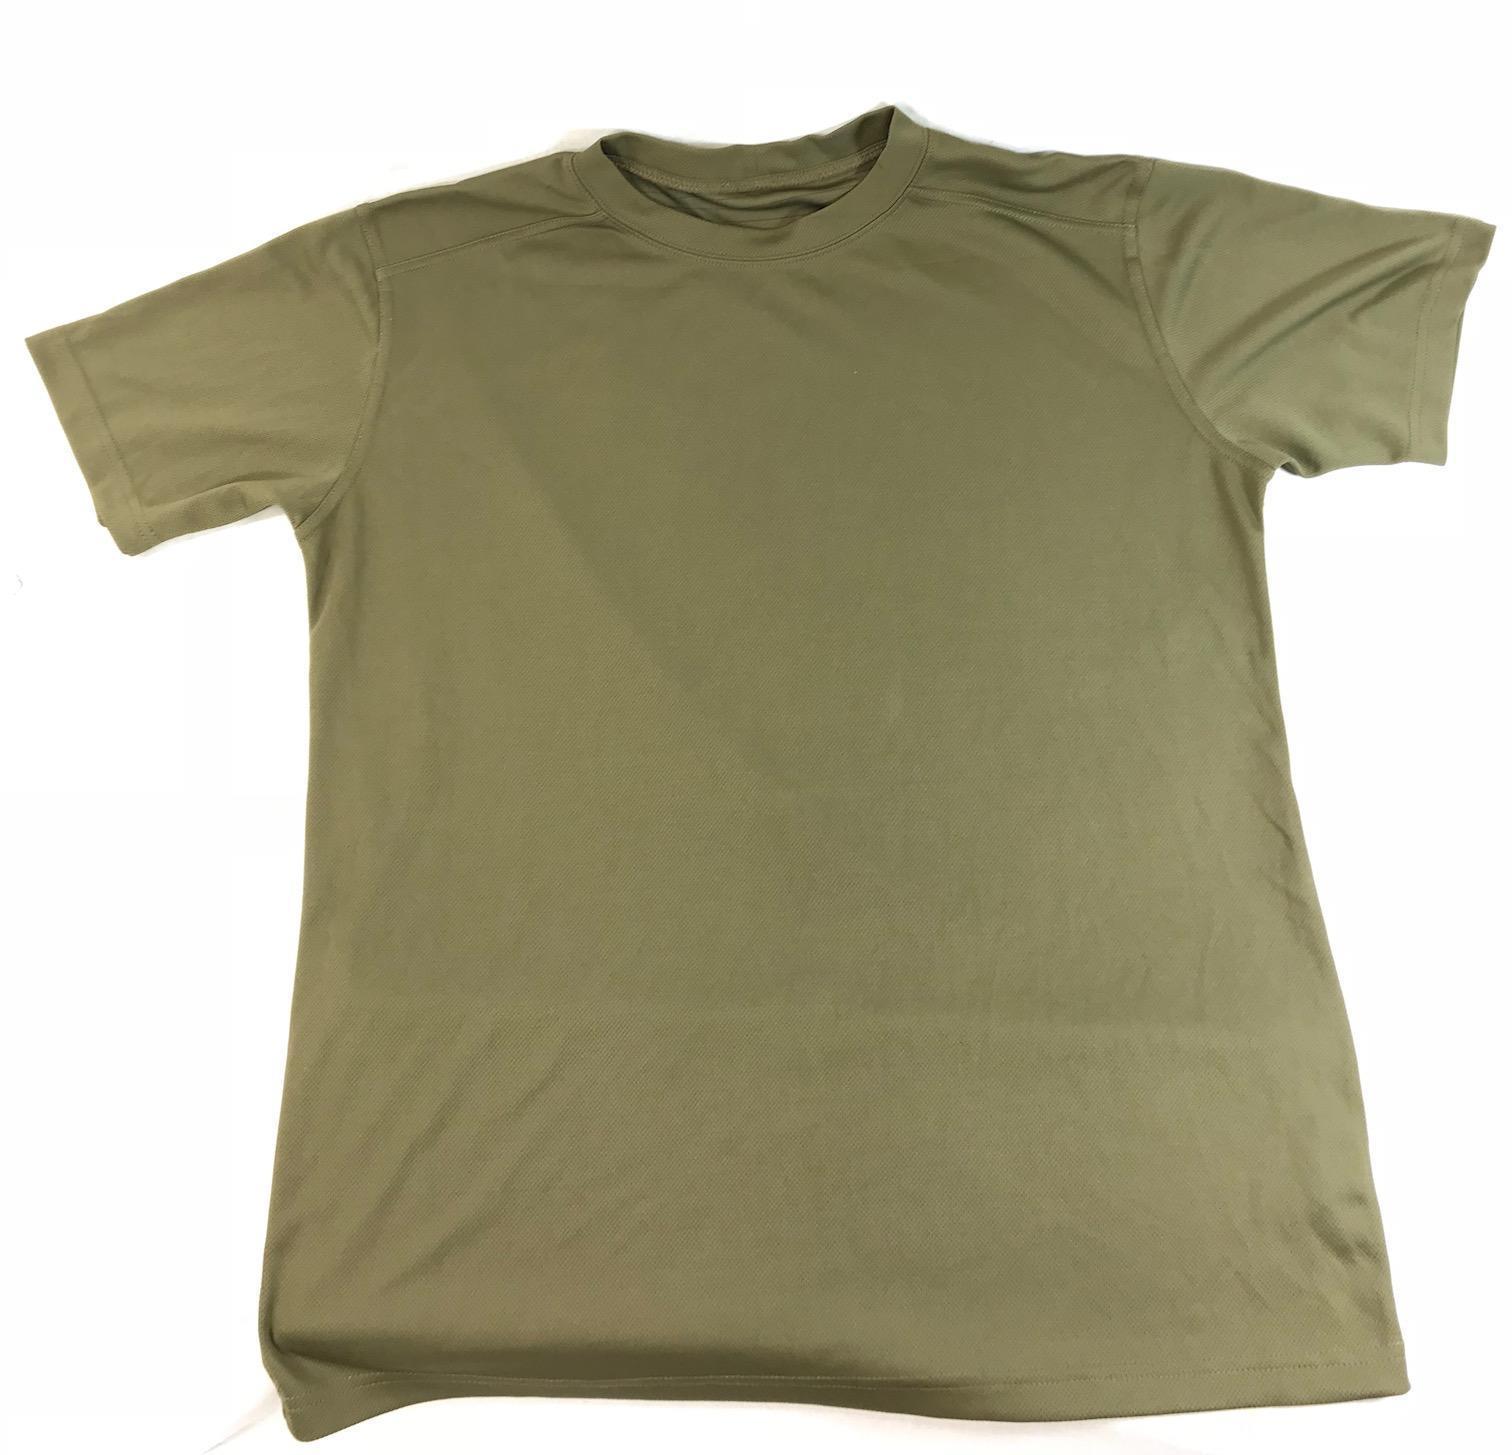 British army surplus coolmax self wicking T tee shirt | eBay